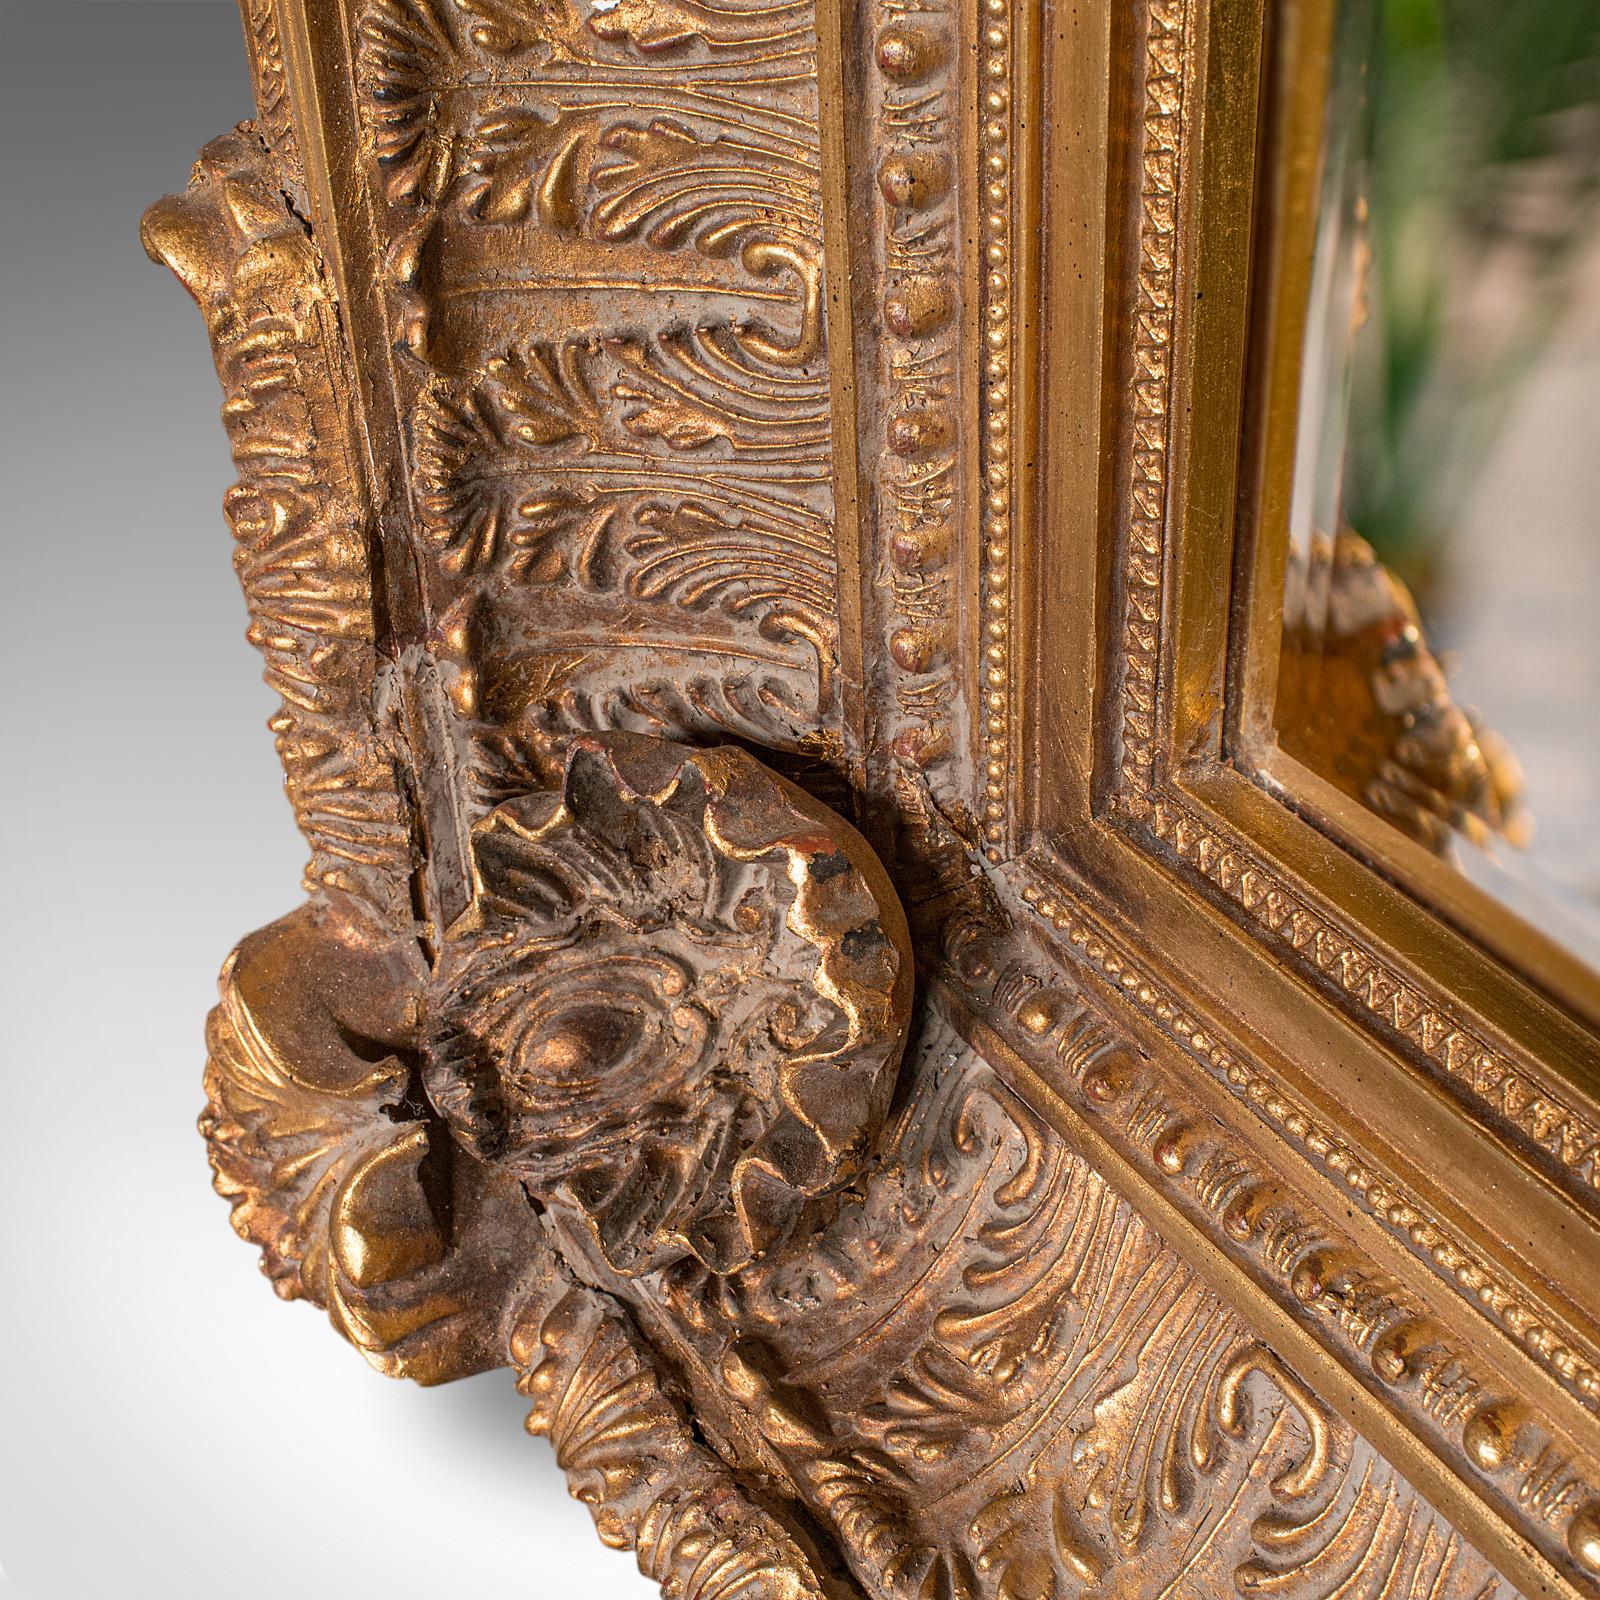 Large Vintage Renaissance Revival Wall Mirror, Continental, Giltwood, Decorative For Sale 1